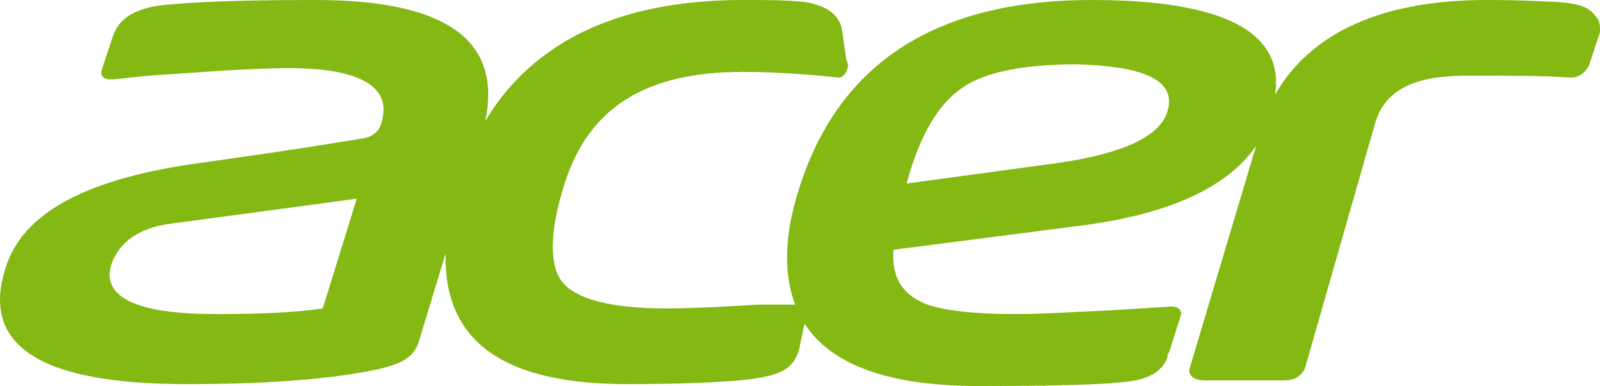 green acer logo